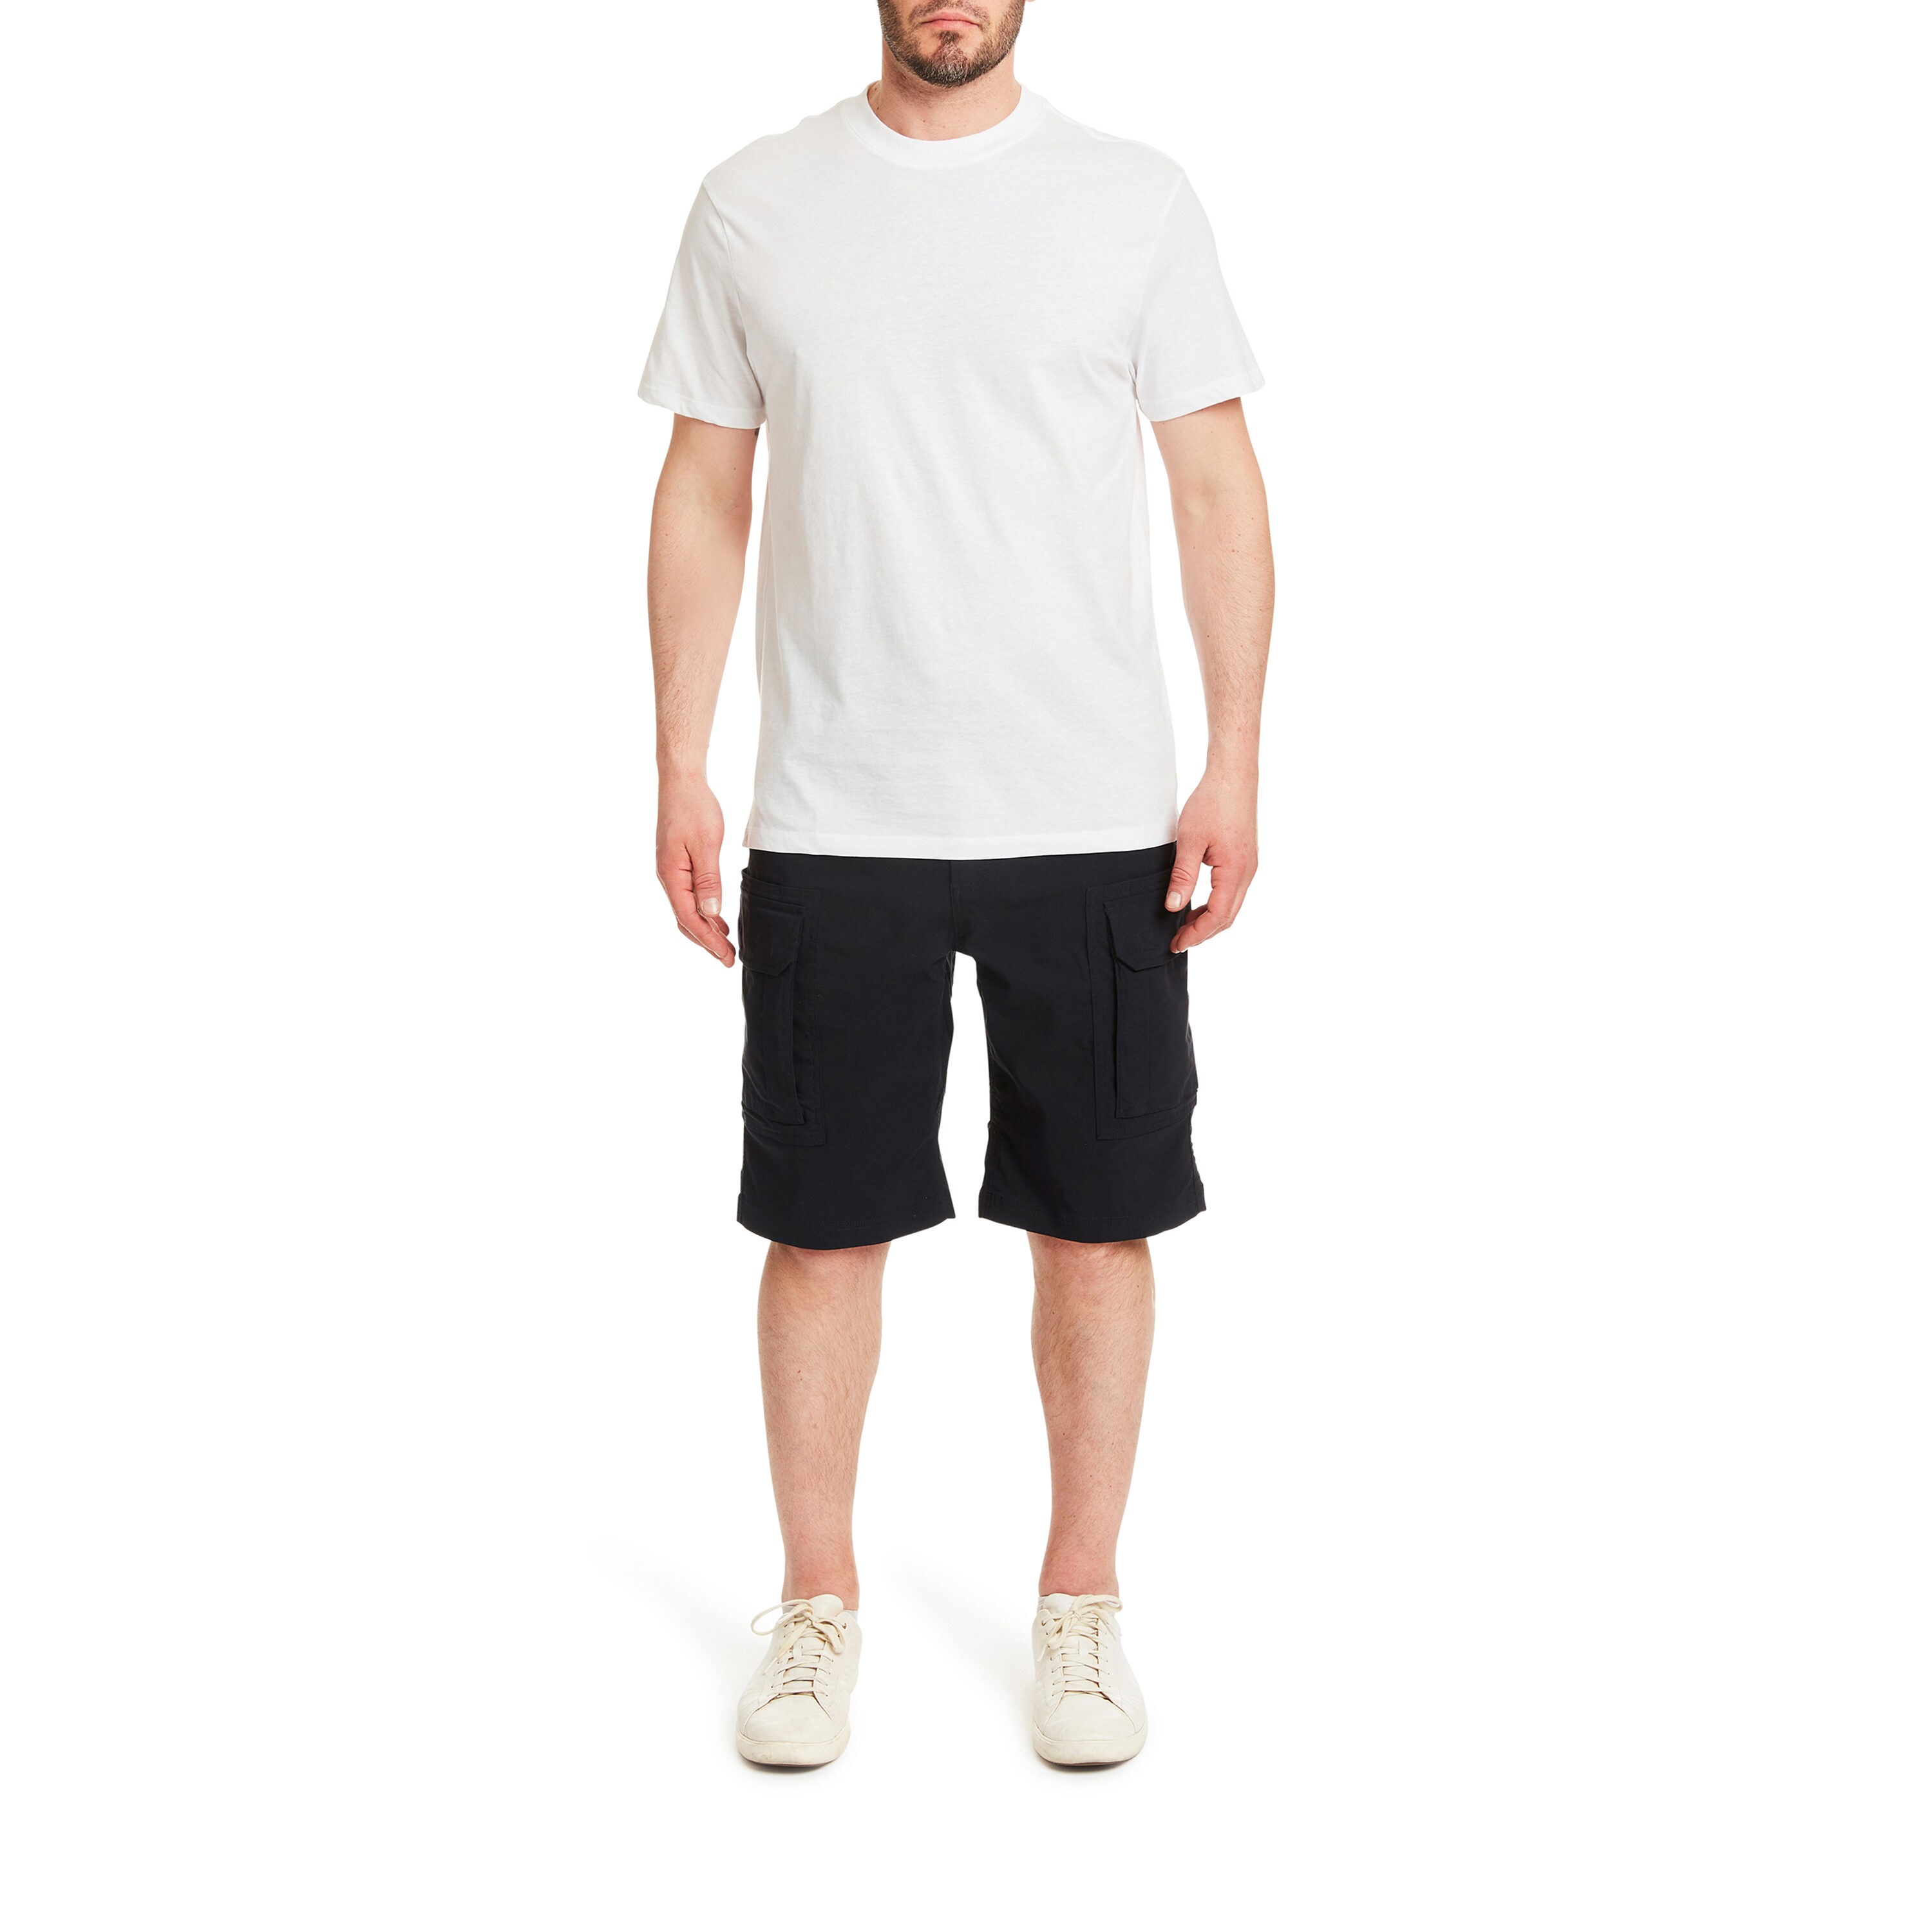 Black Blocker Shorts - Lowes Menswear